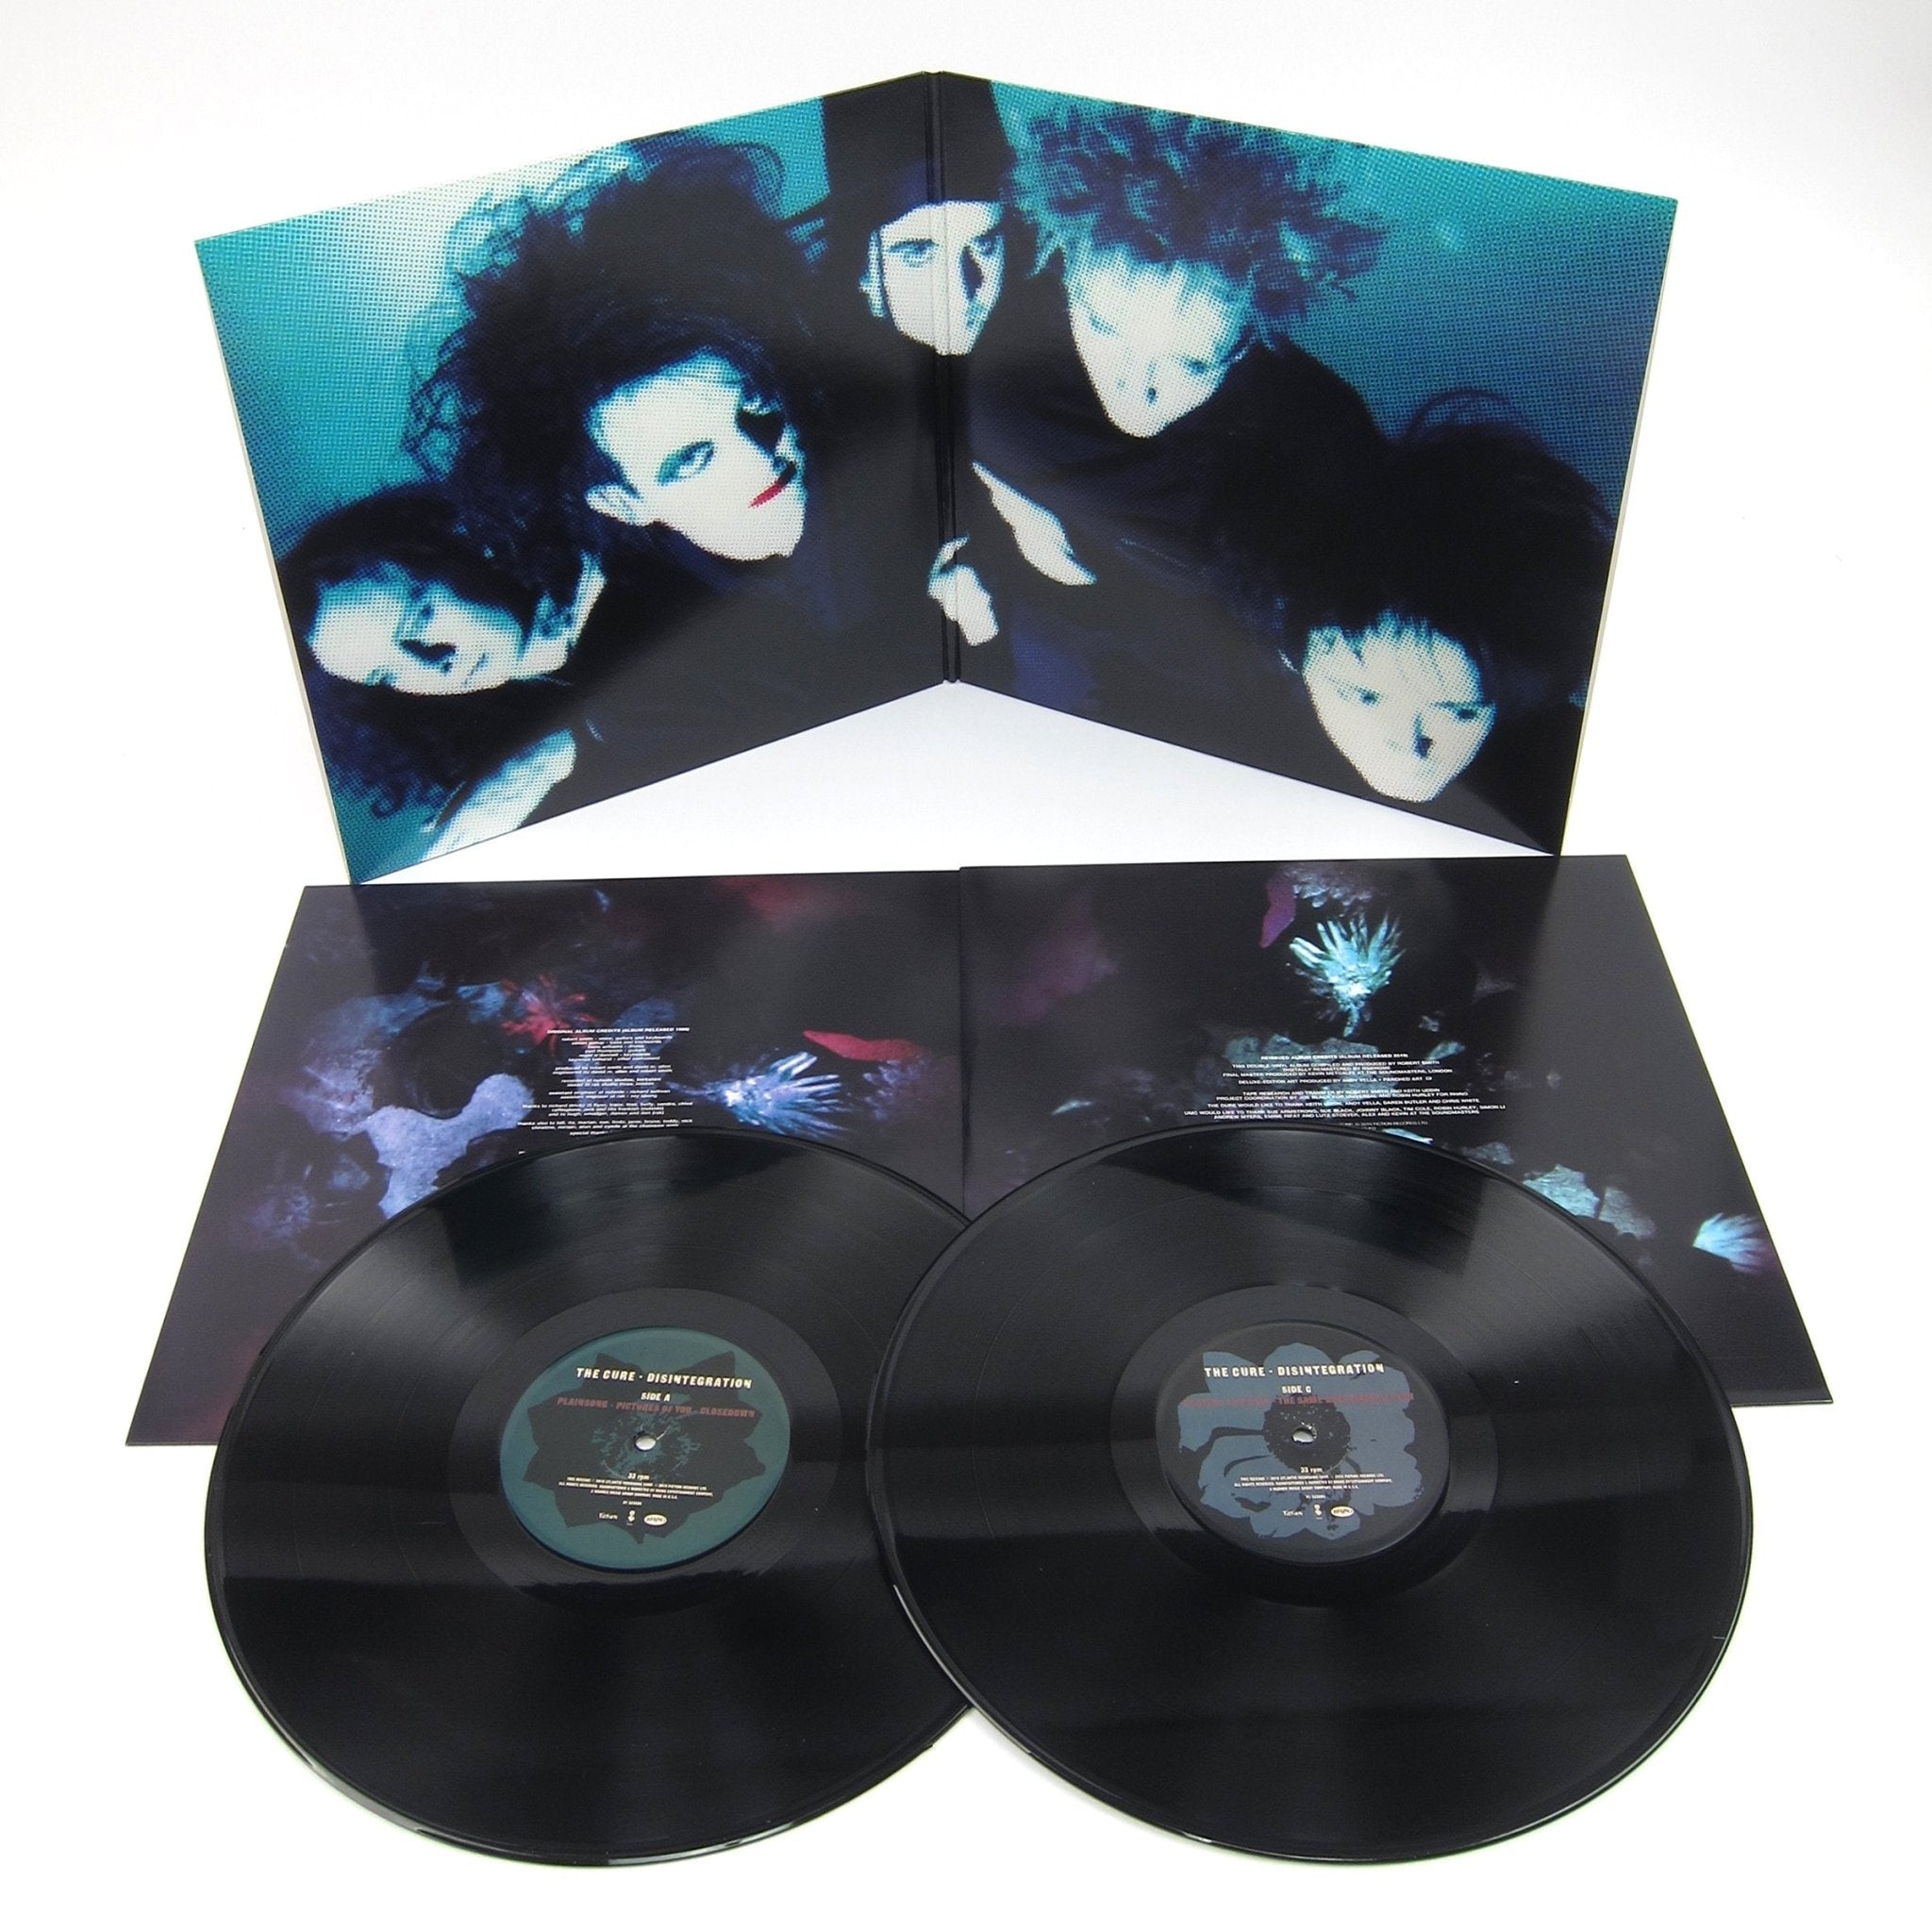 The Cure: Disintegration: 180g 2LP Black Vinyl - Steadfast Records